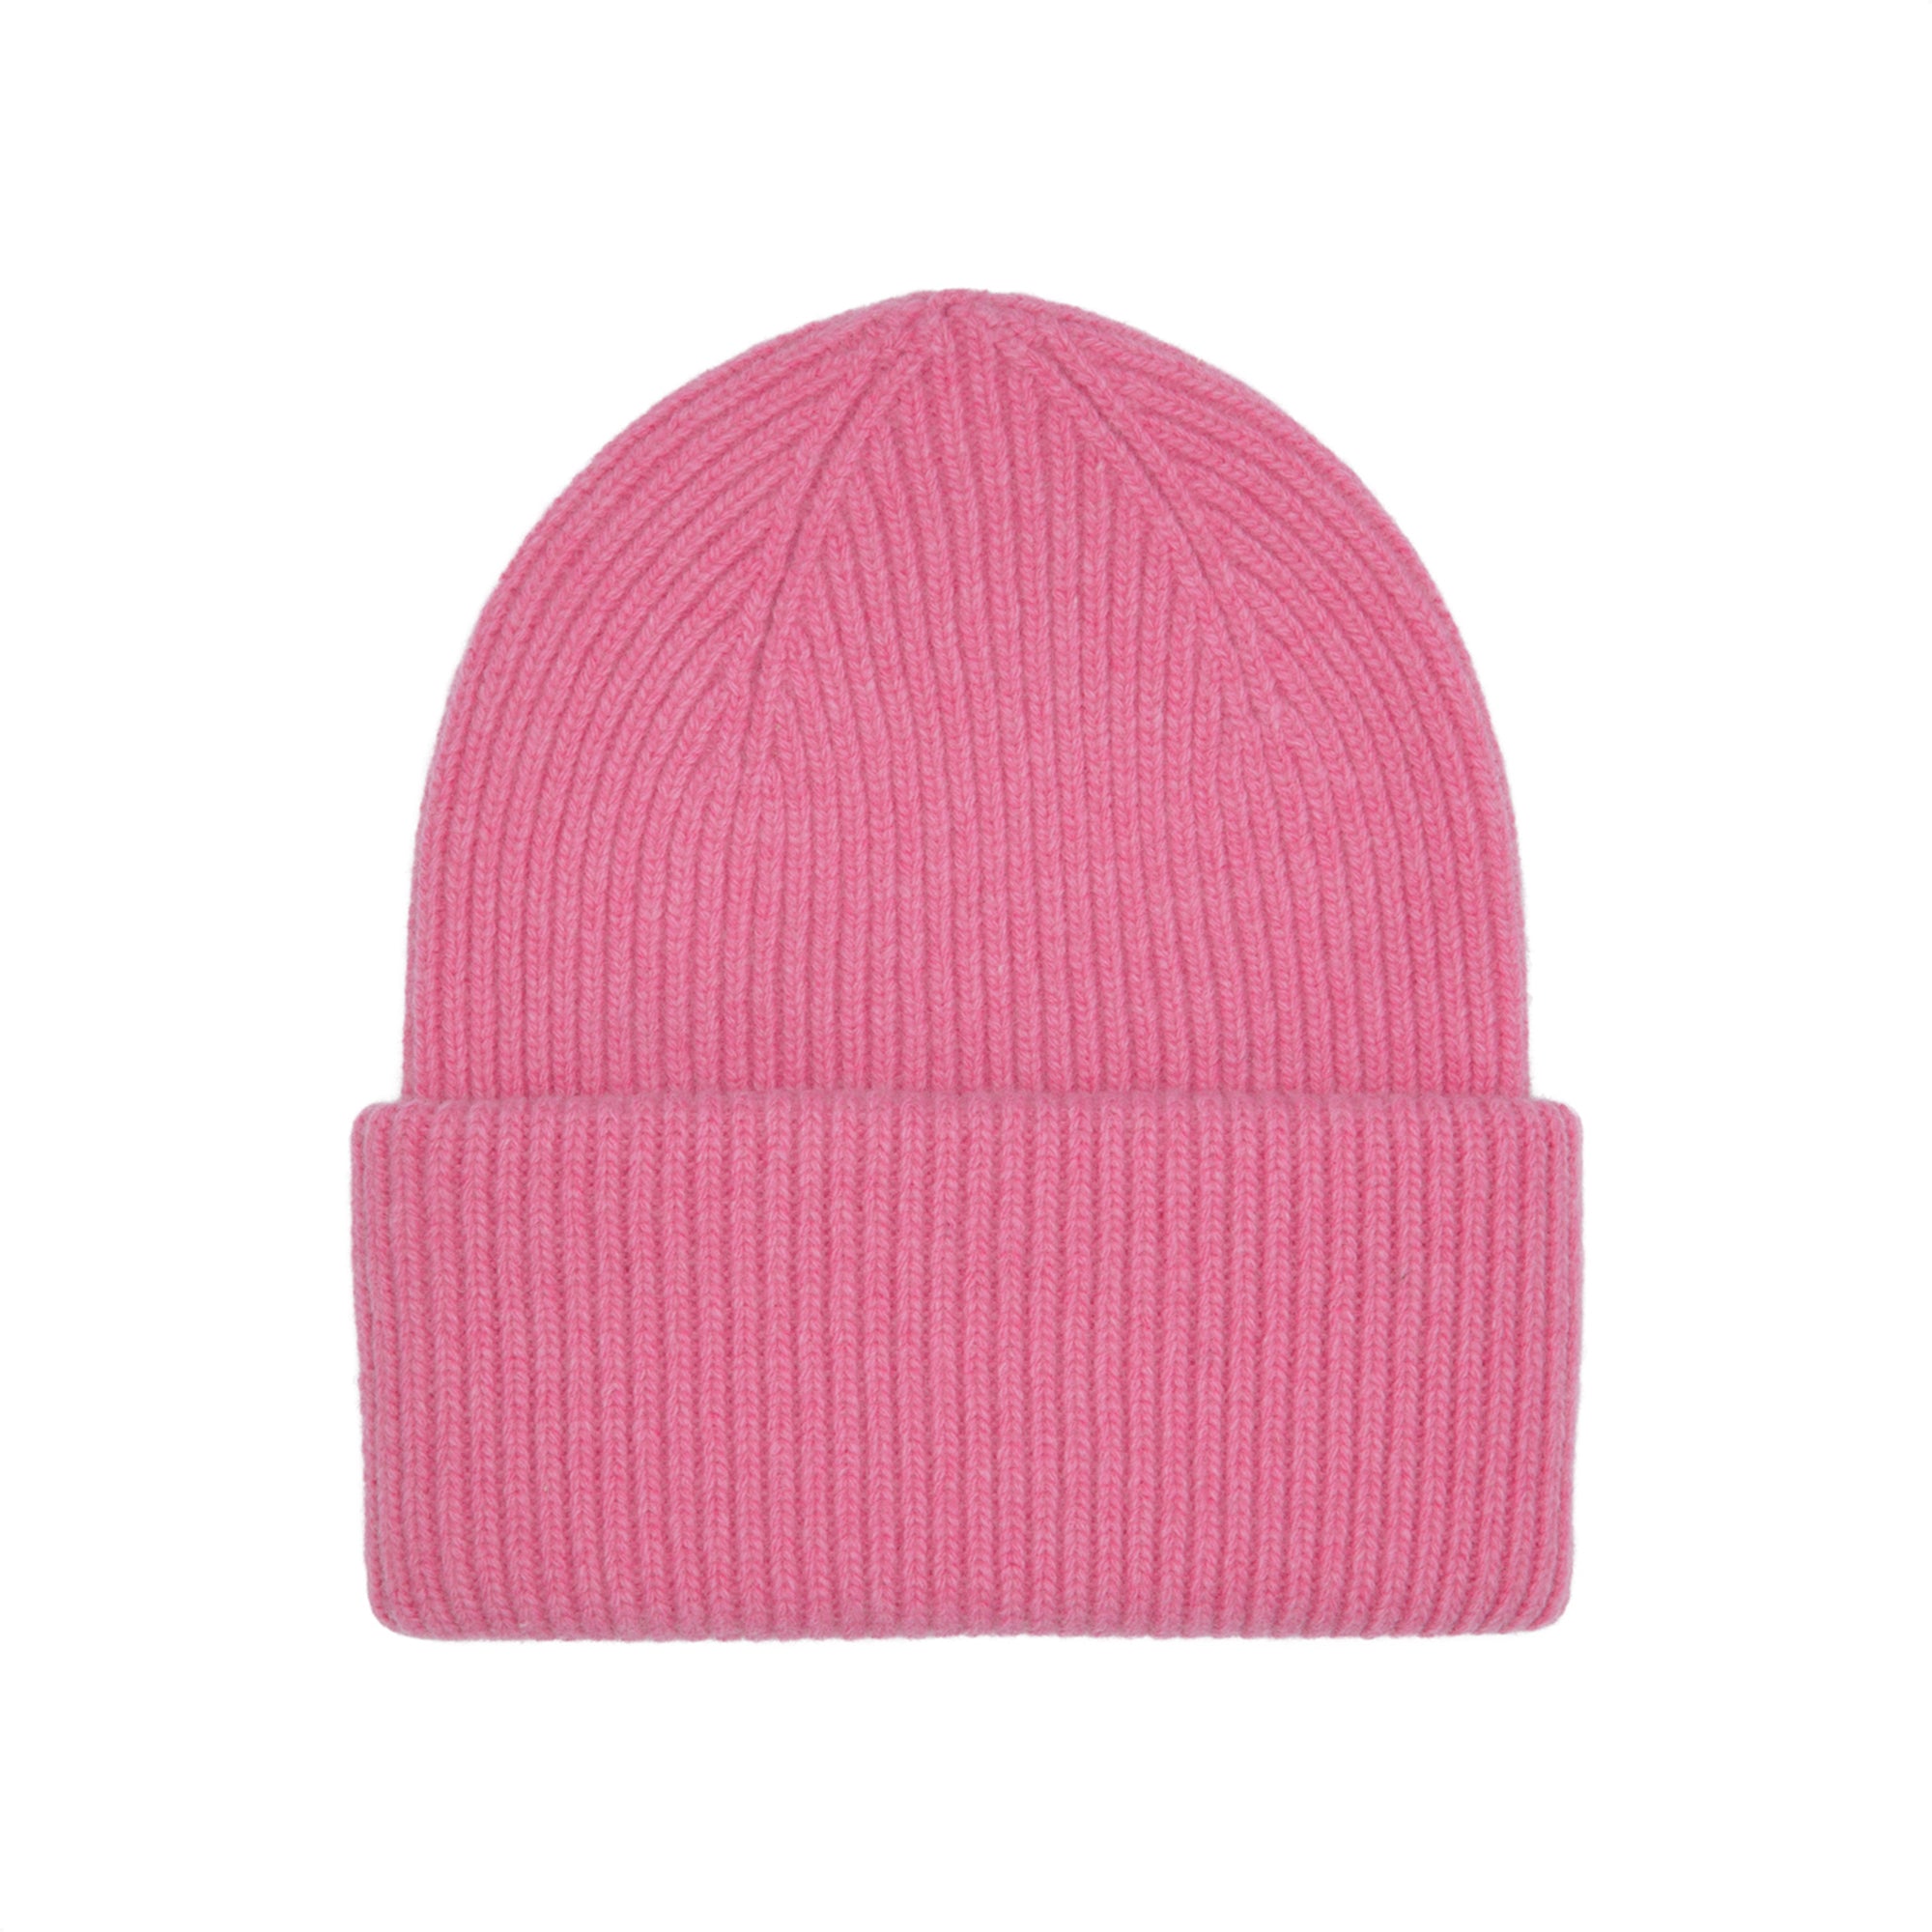 Colorful Standard Merino Wool Hat - Bubblegum Pink